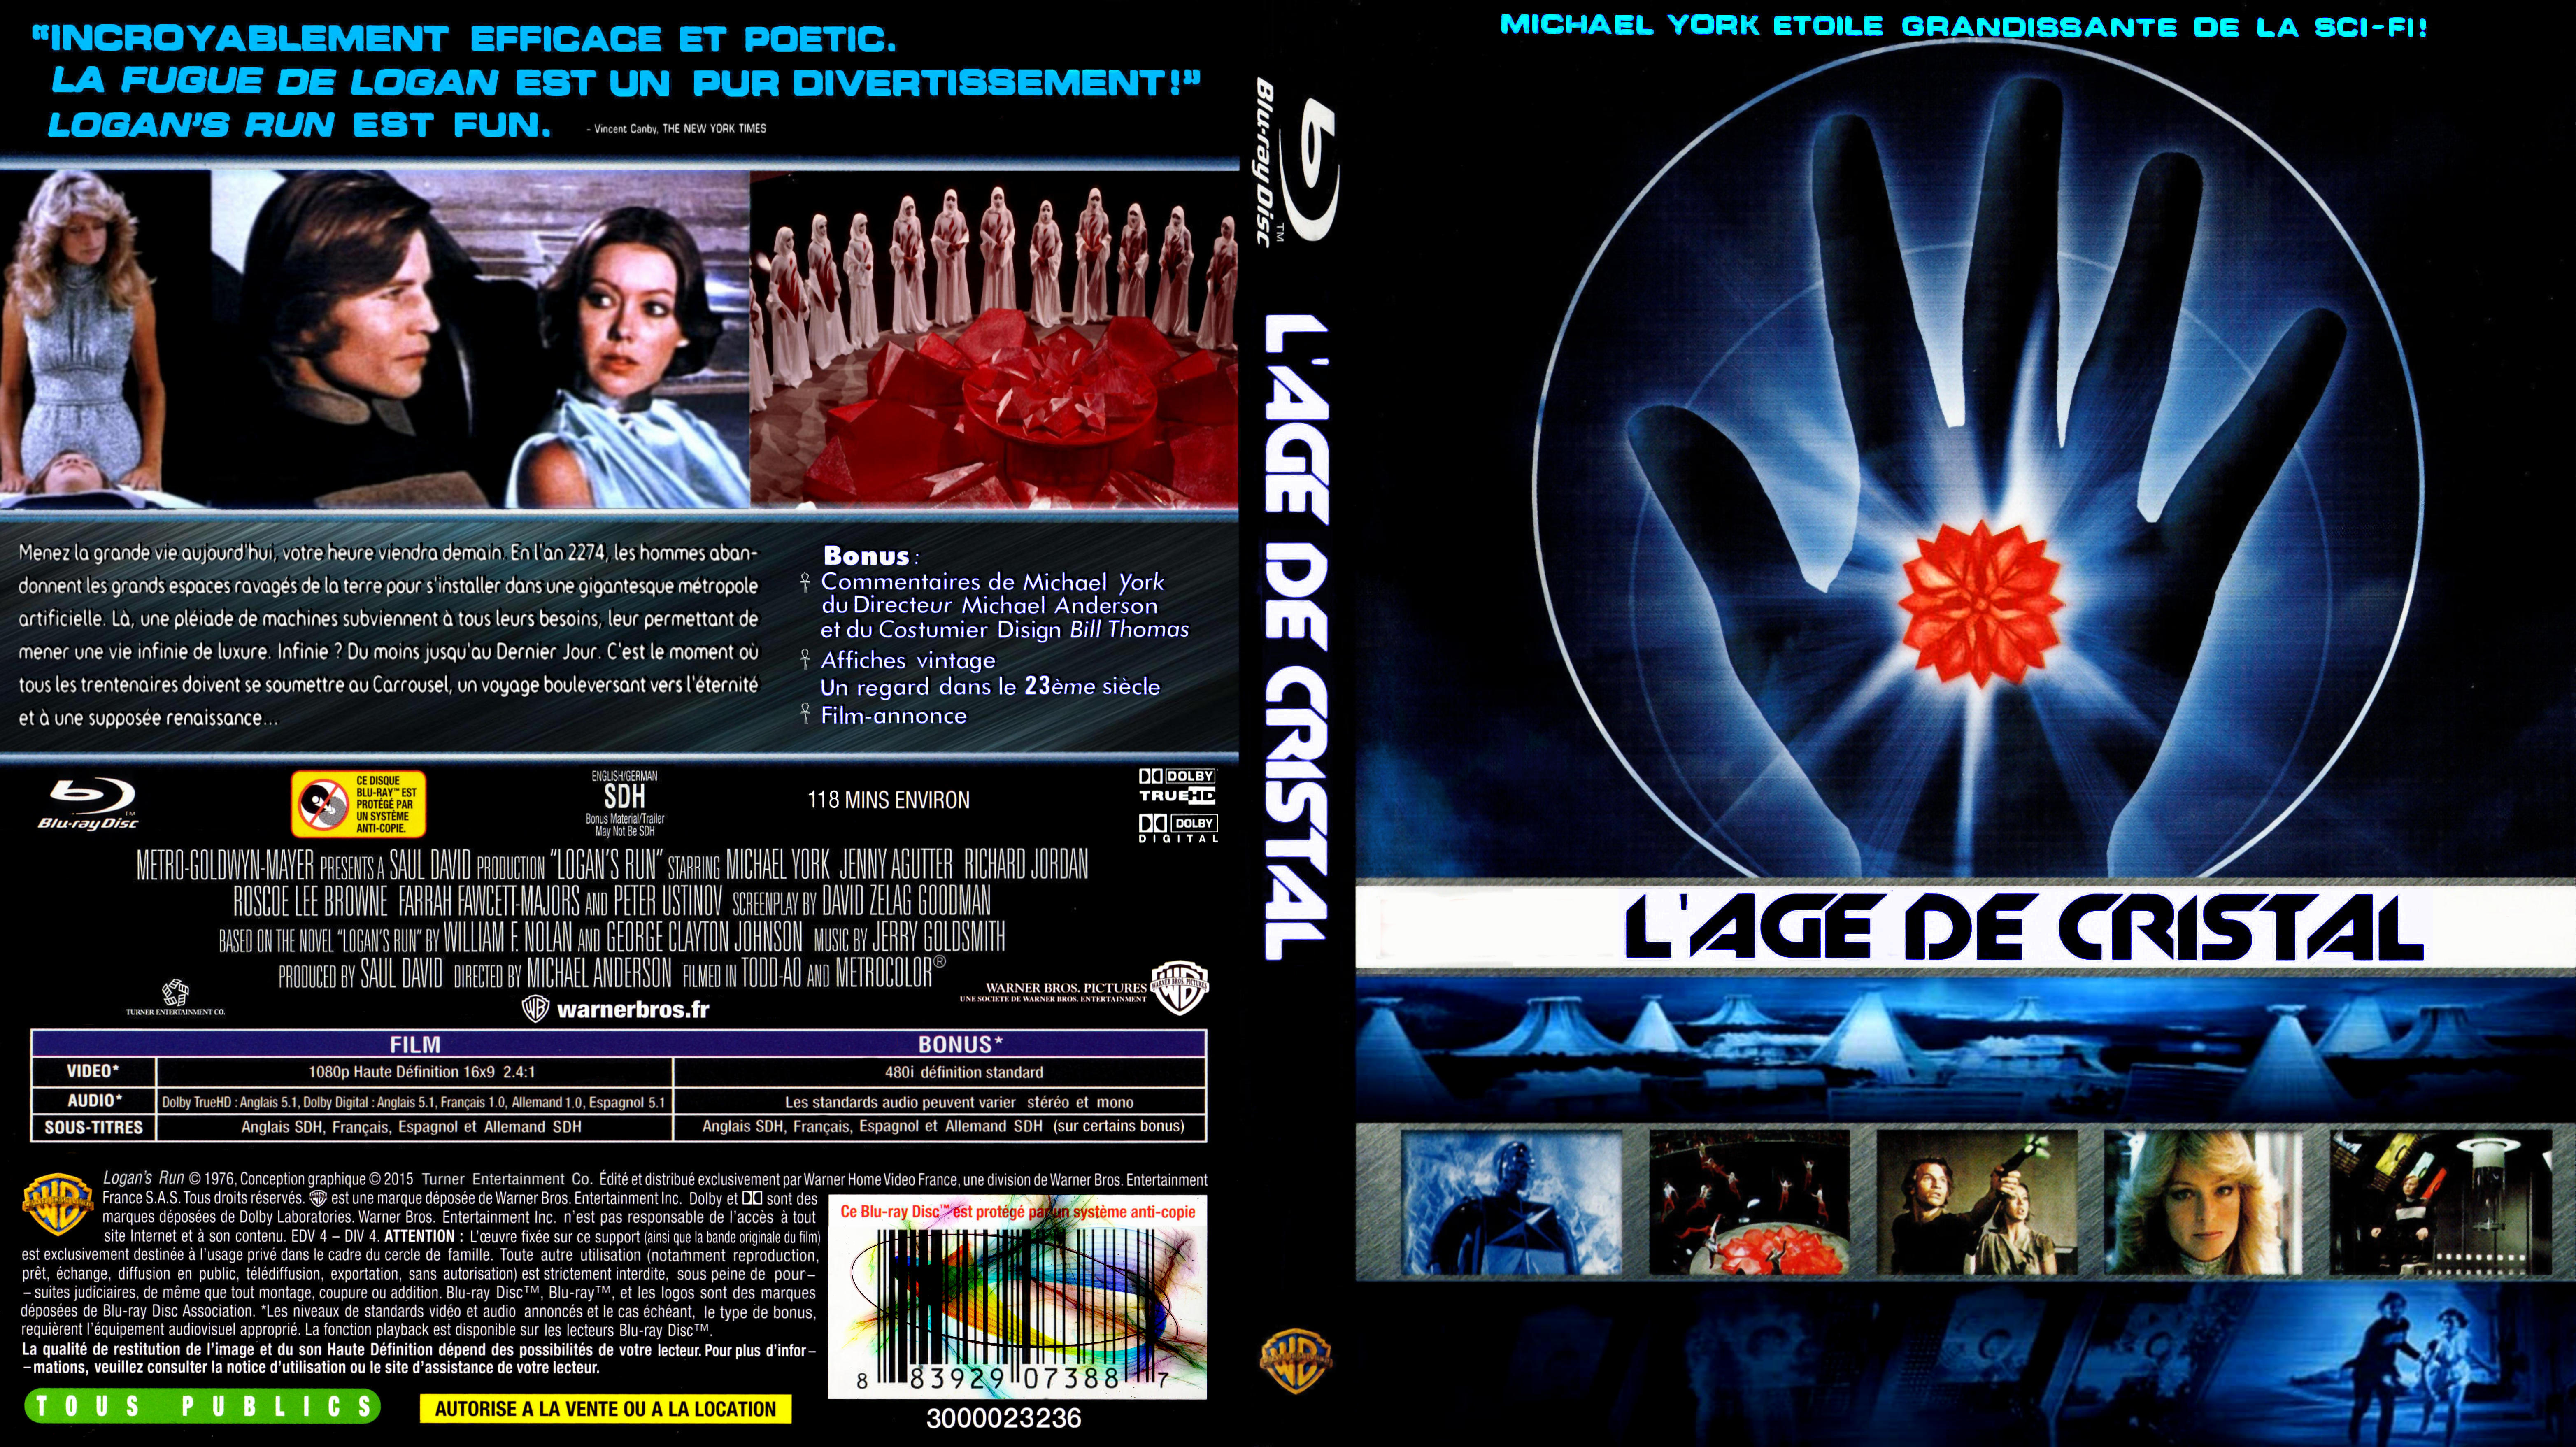 Jaquette DVD de L'age de cristal custom (BLU-RAY) v2 - Cinéma Passion